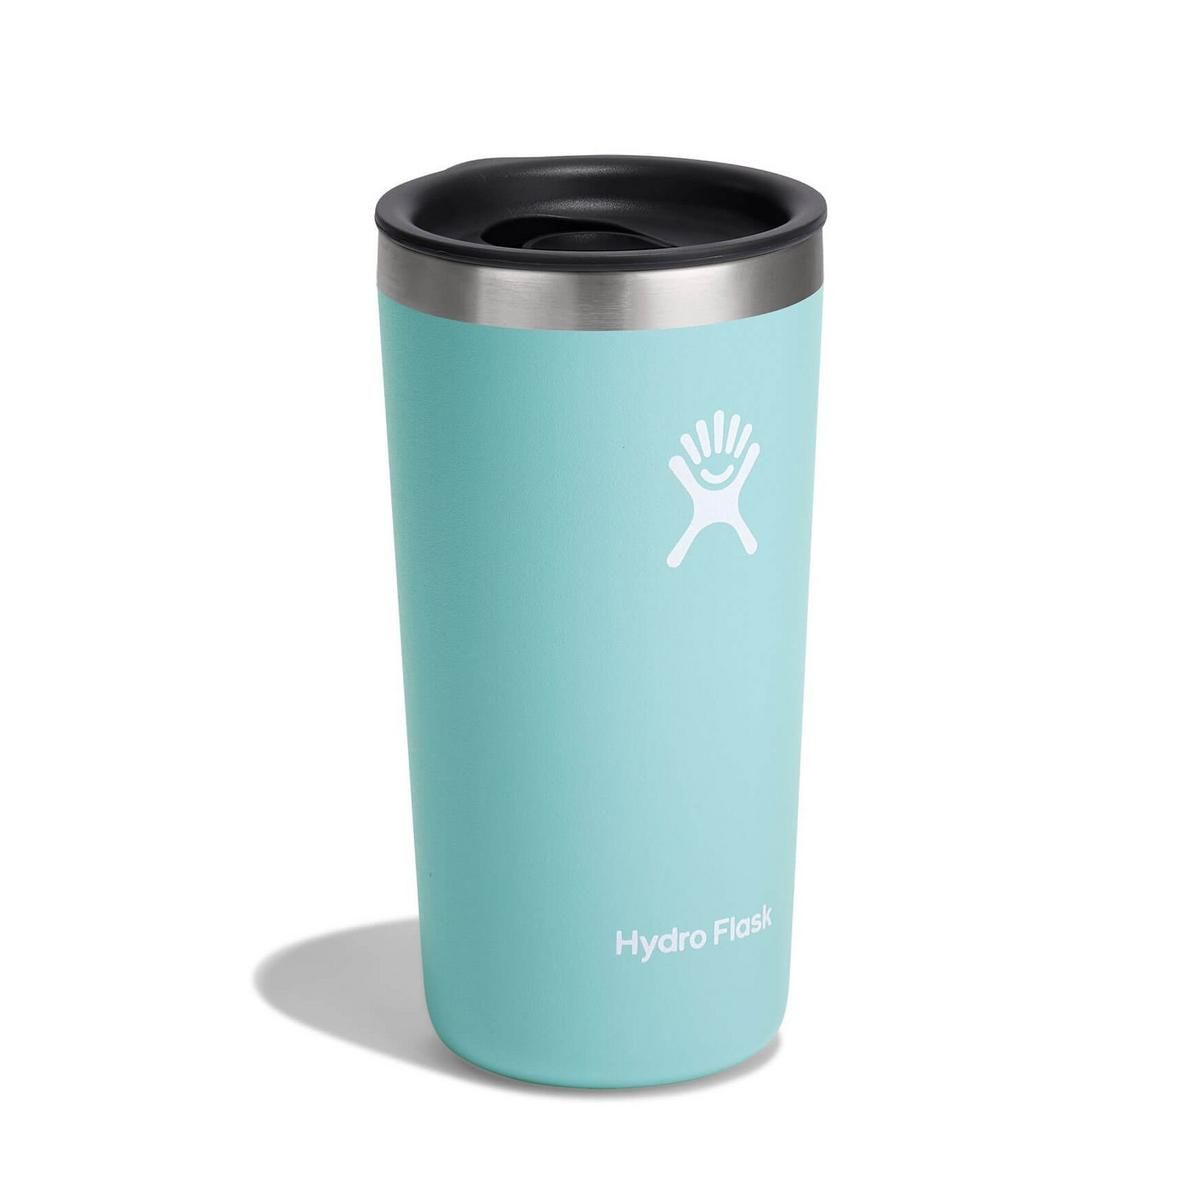 Hydro Flask 12 oz All-Round Tumbler - Dew Blue